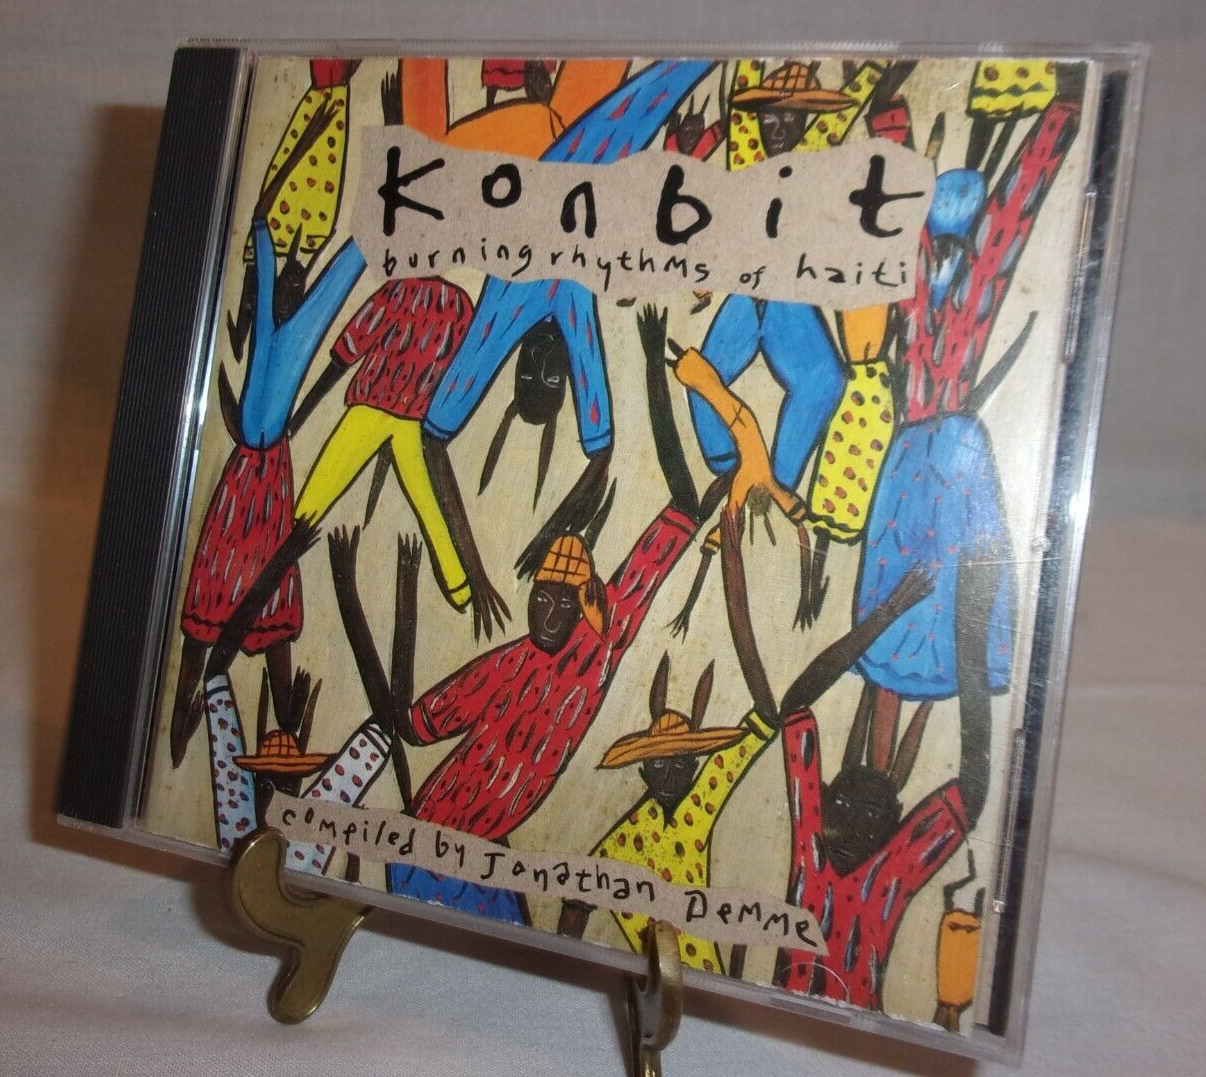 Konbit CD - Burning Rhythms of Haiti - Excellent Condition